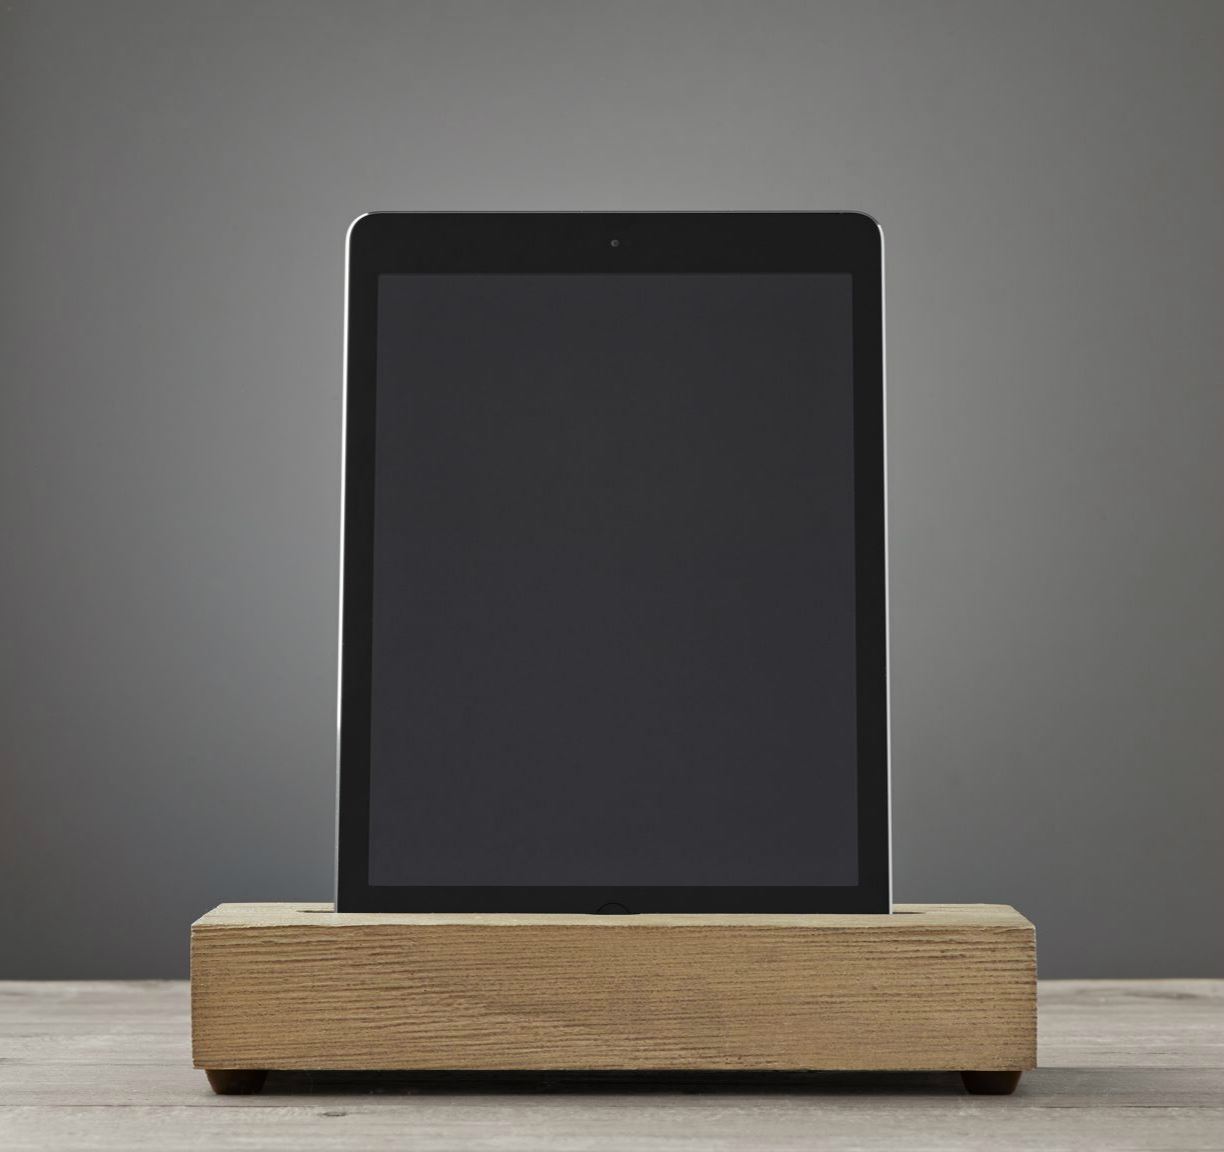 iPad charging station from Restoration Hardware